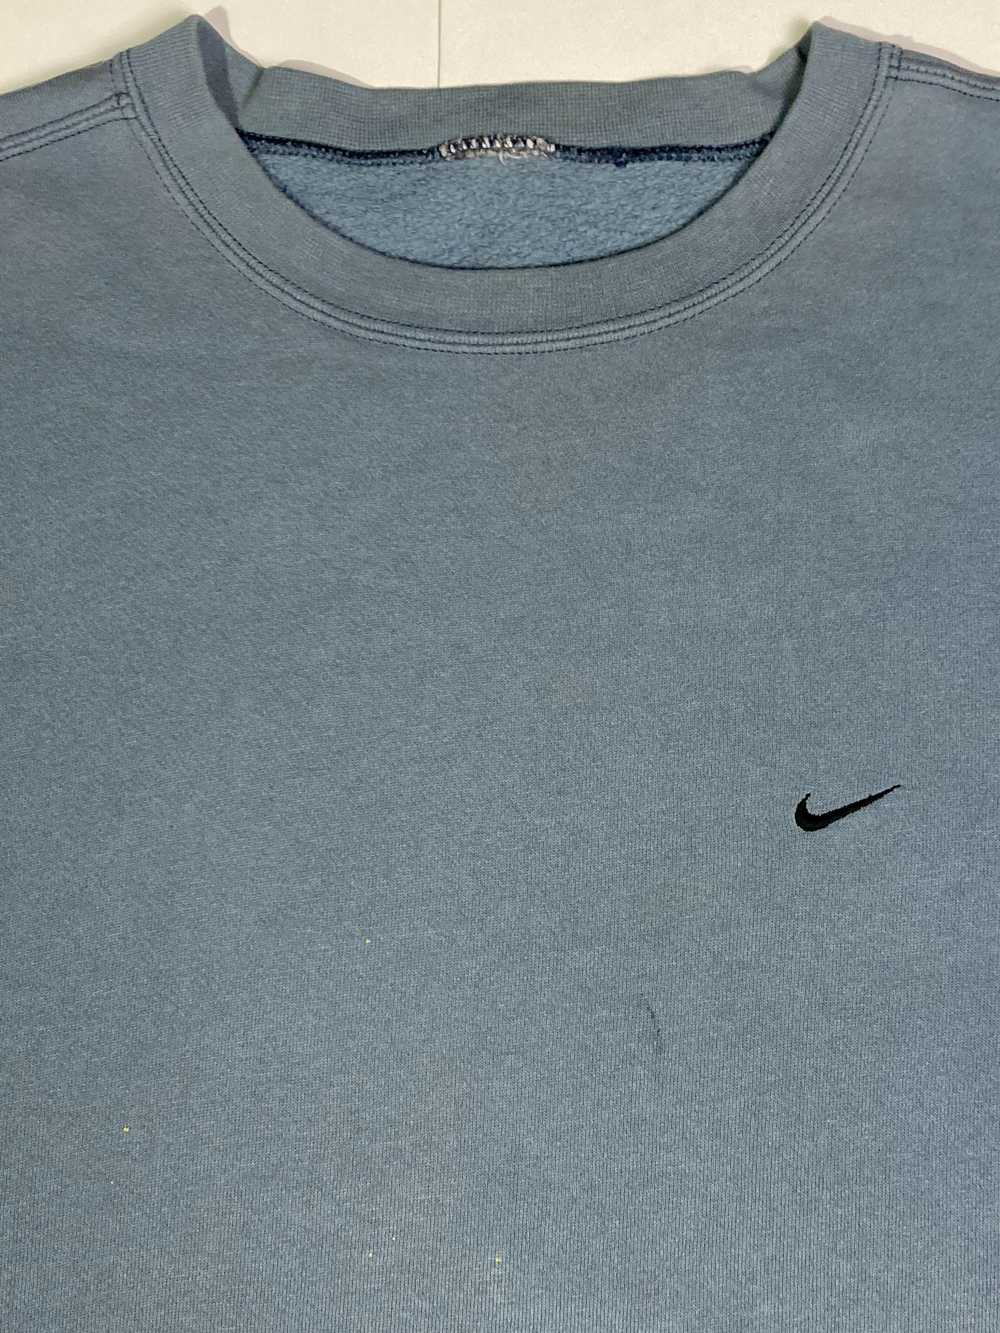 Vintage 90s Nike Baby Blue XL Sweatshirt - image 3